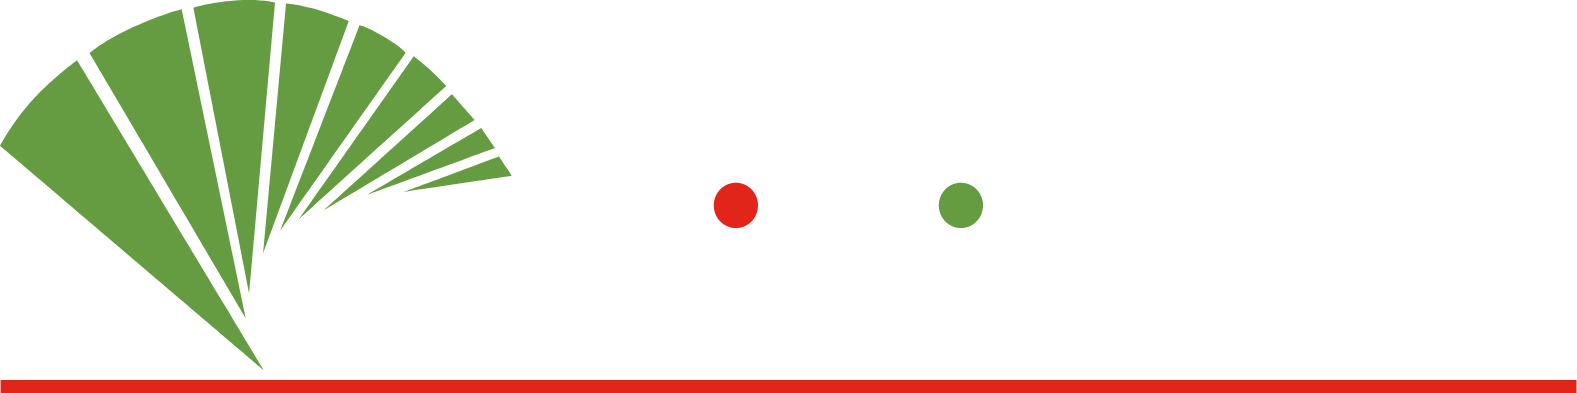 Unicaja Banco Logo groß für dunkle Hintergründe (transparentes PNG)